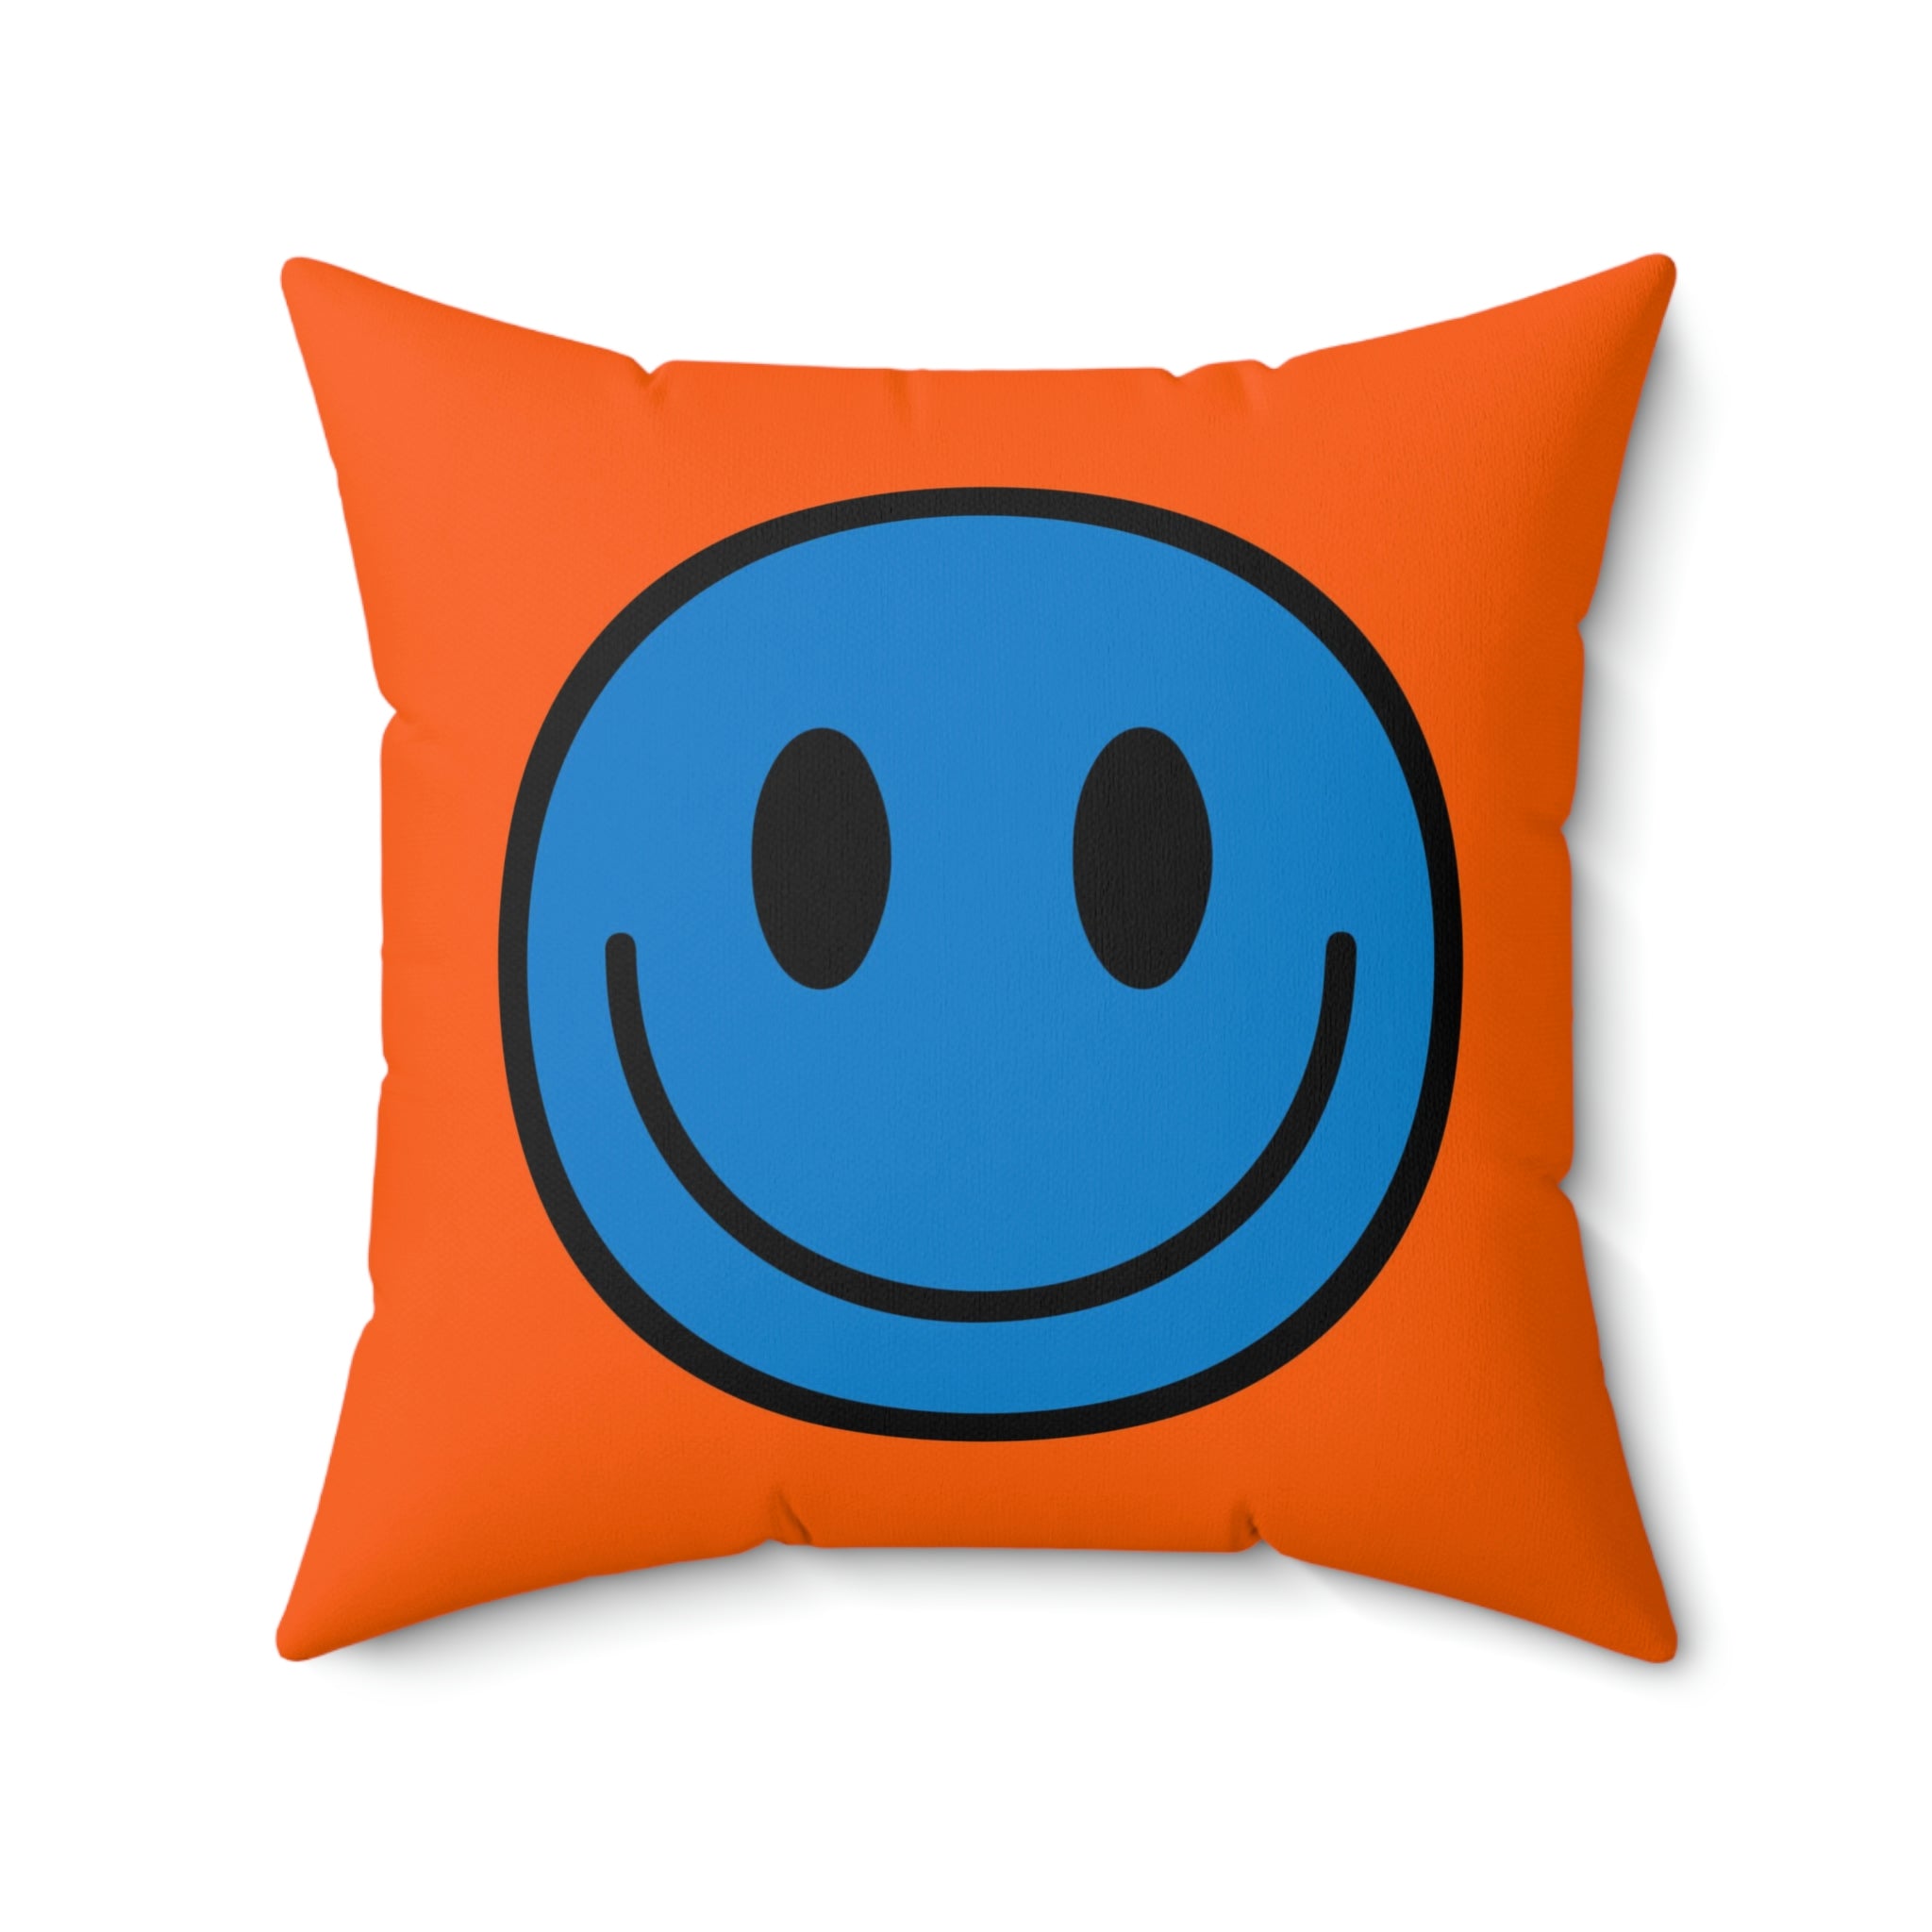 Spun Polyester Pillow Happy Face blue/orange